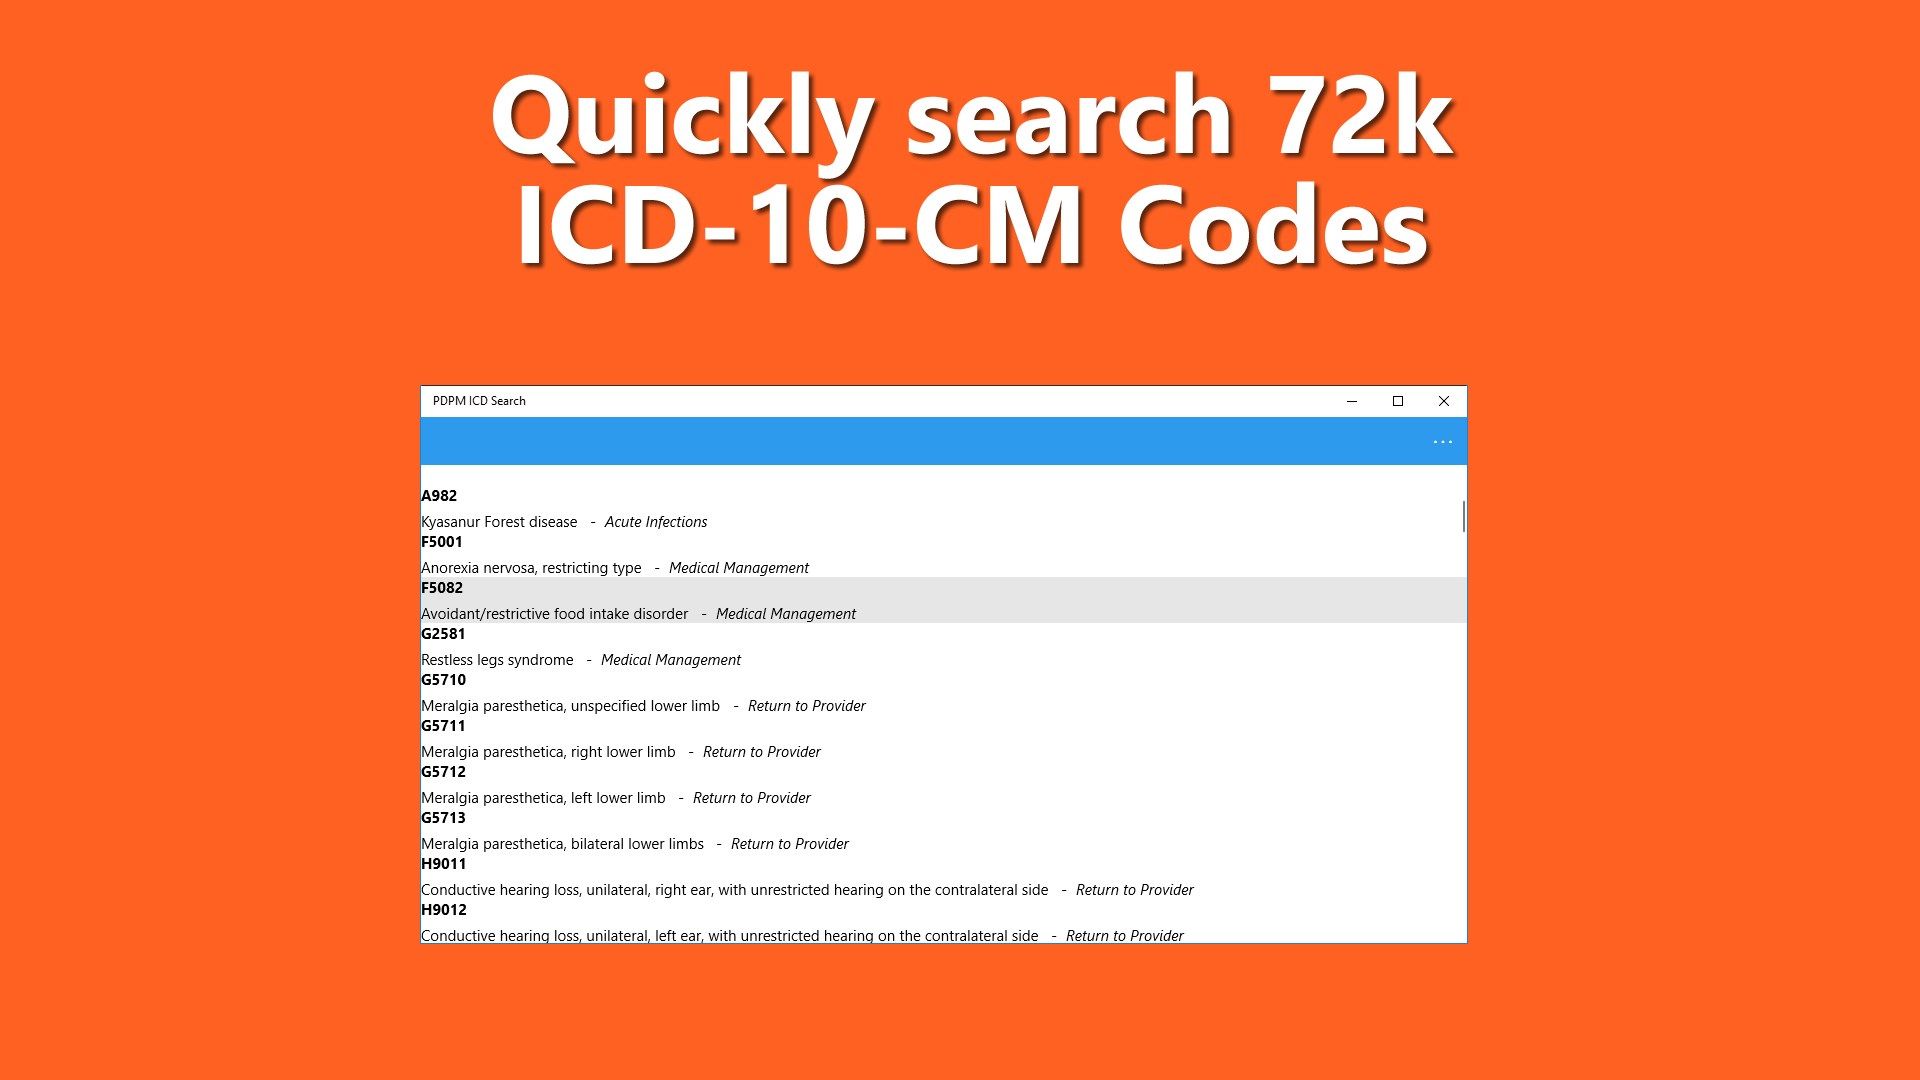 PDPM ICD Search